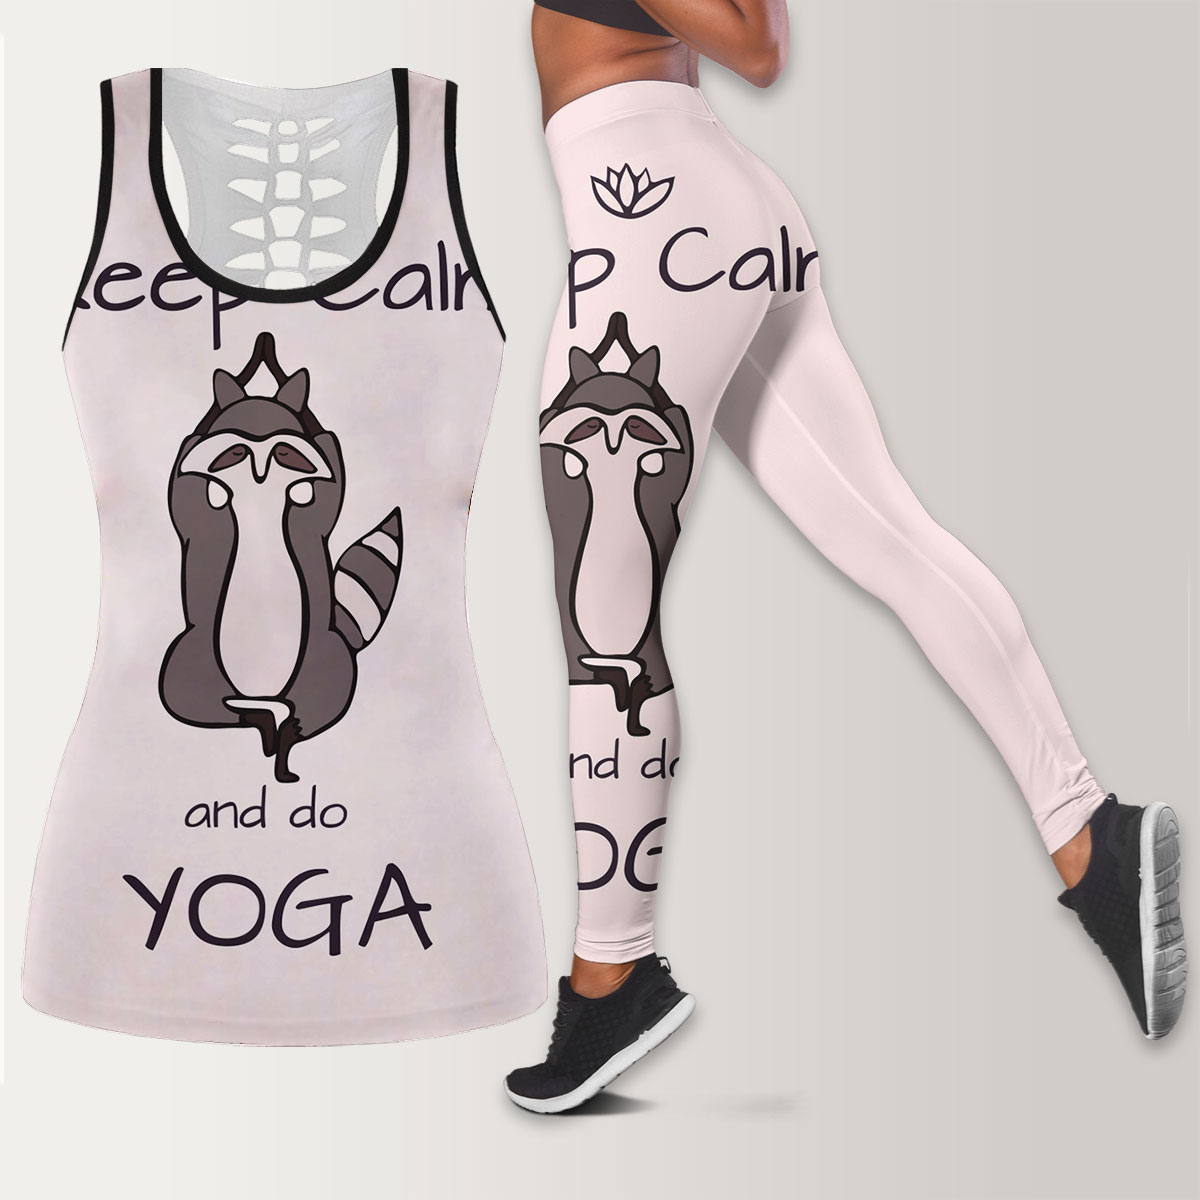 Calm And Yoga Raccoon Legging Tank Top set